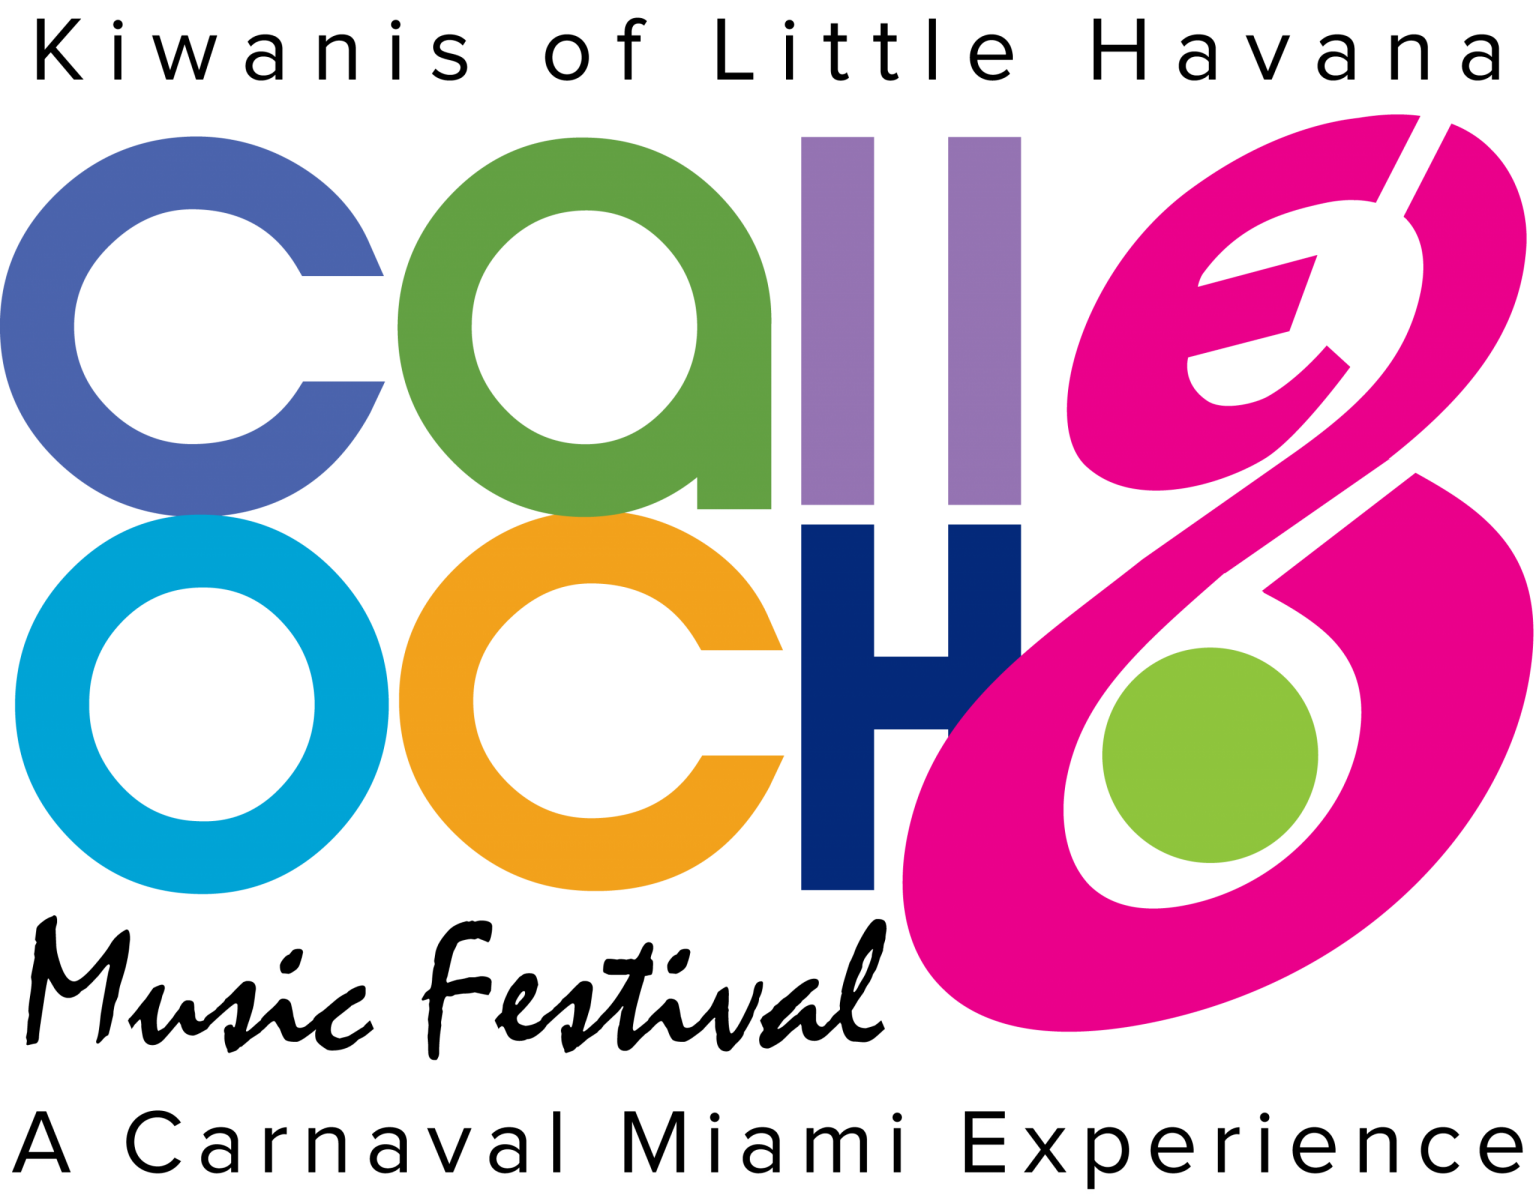 Events Carnaval Miami